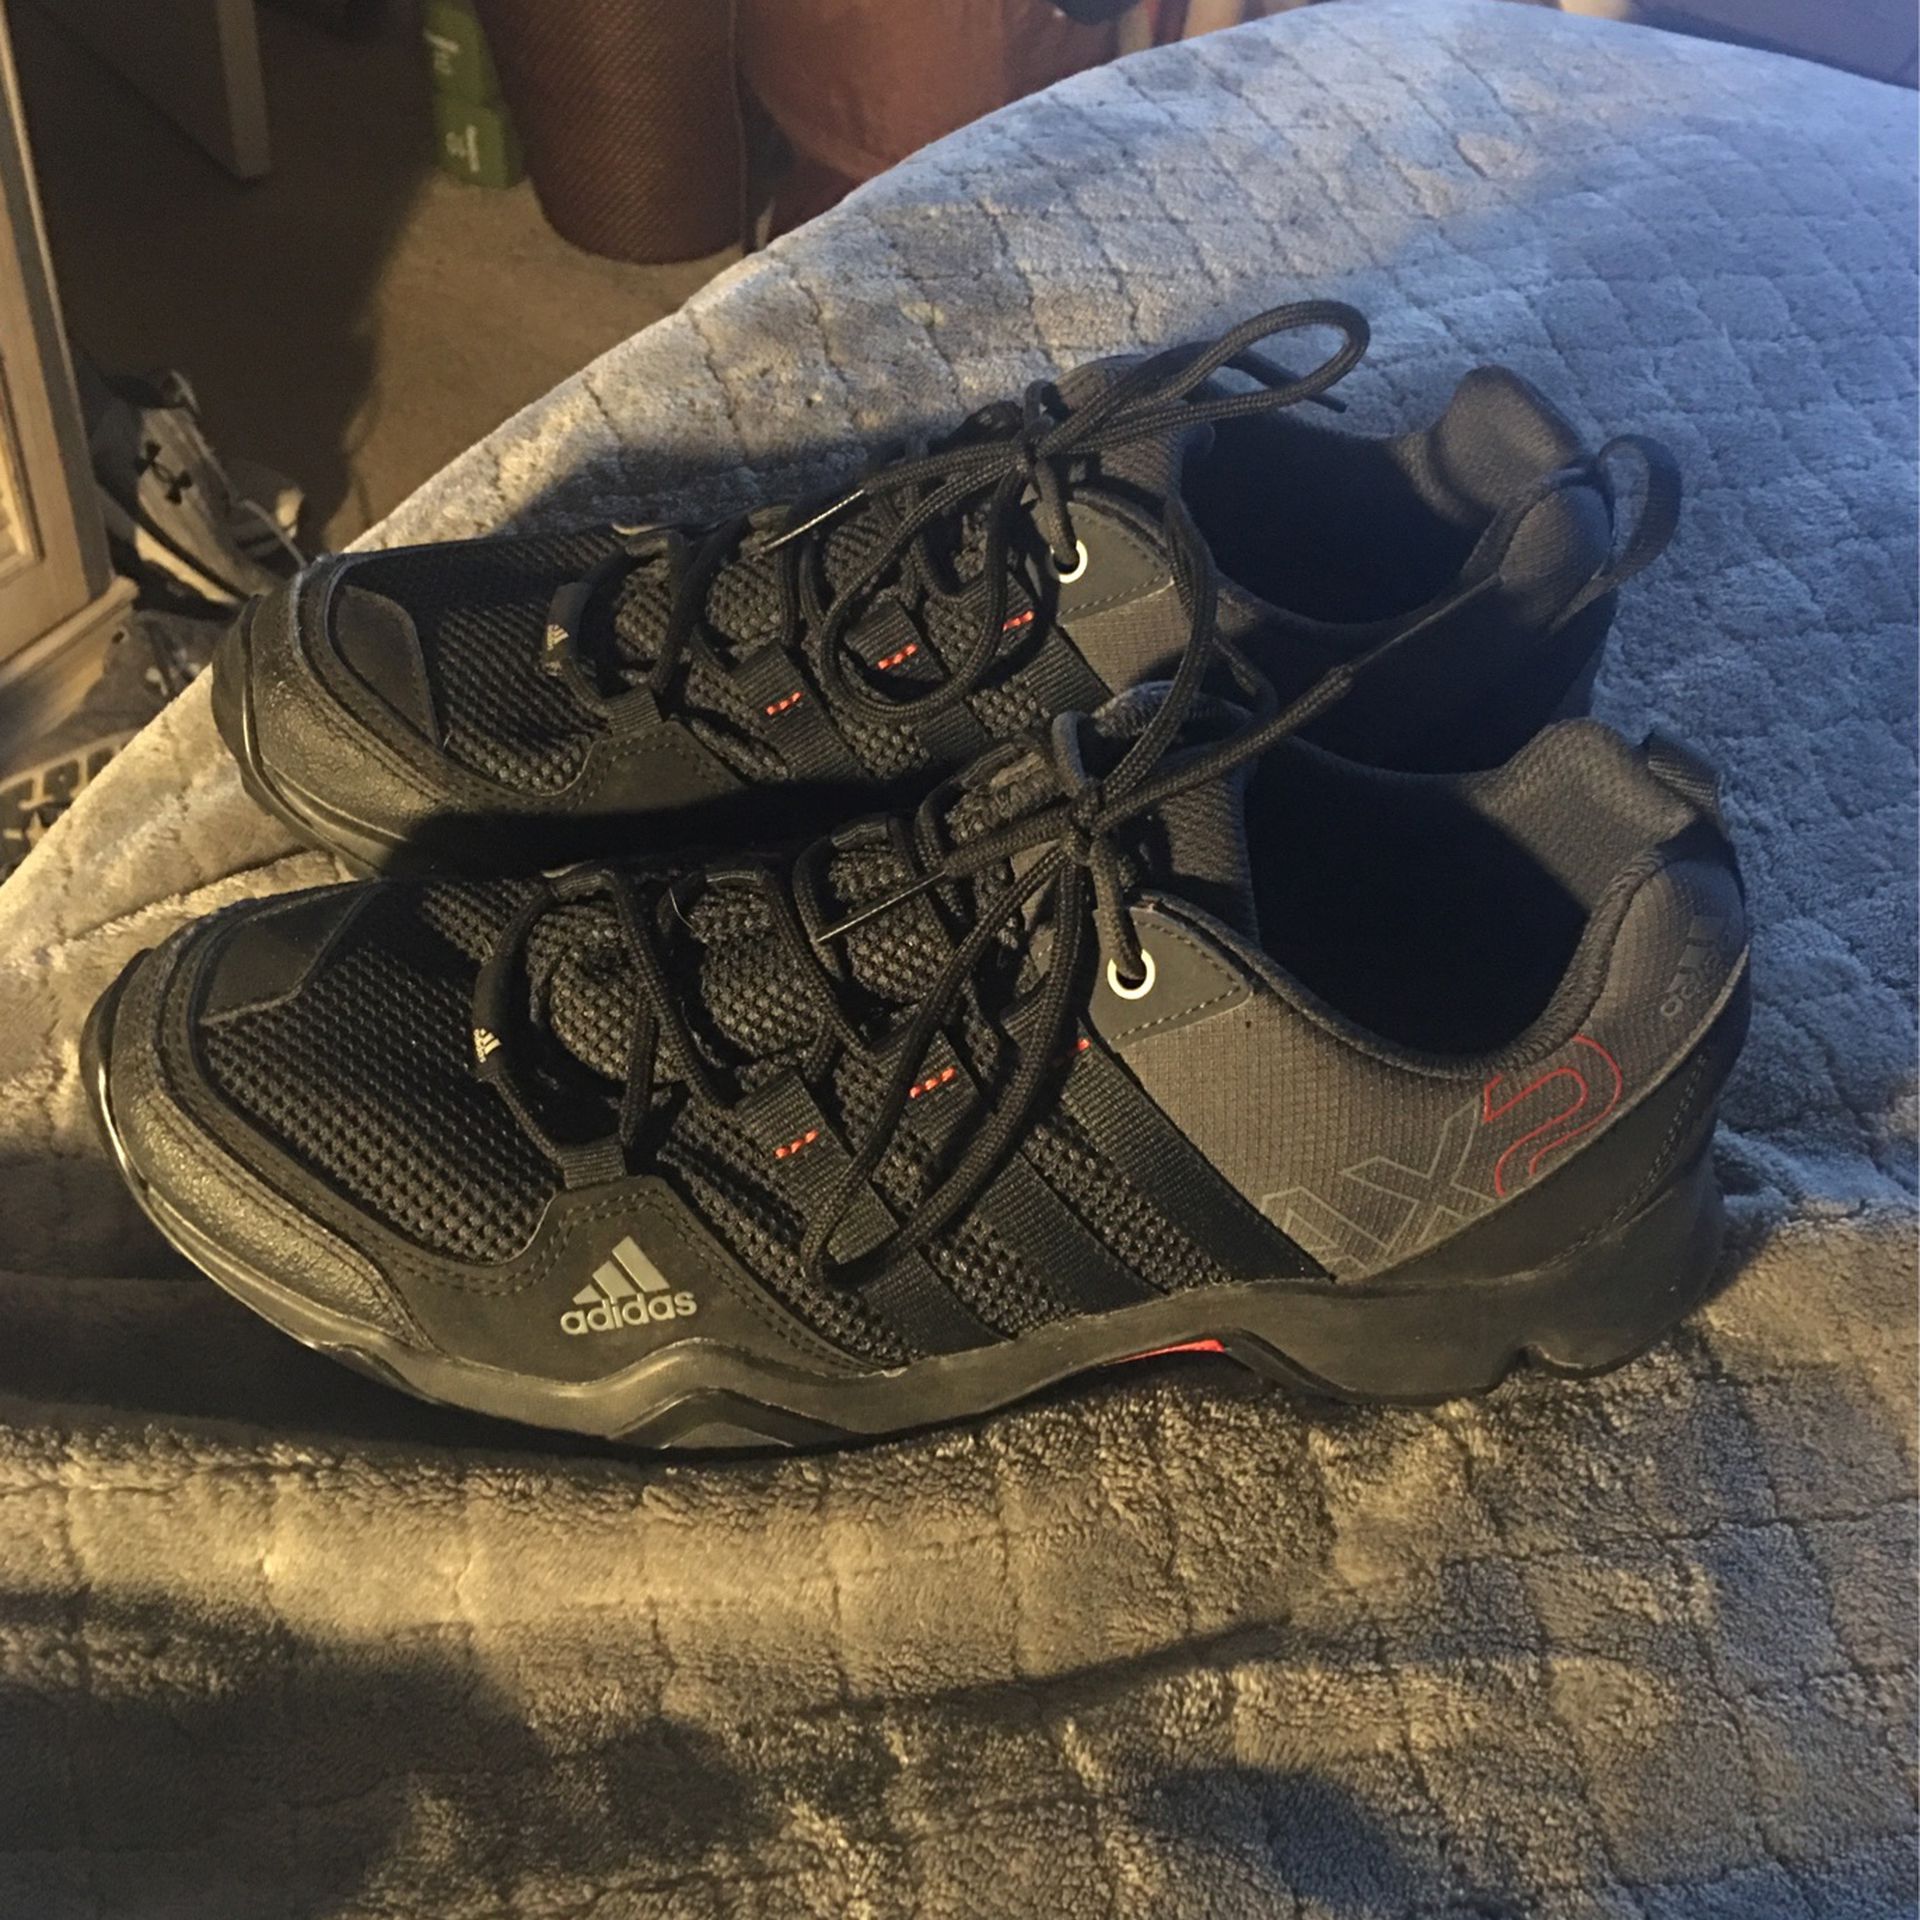 Adidas AX2 Hiking Trail Black Shoes Men’s Size 9